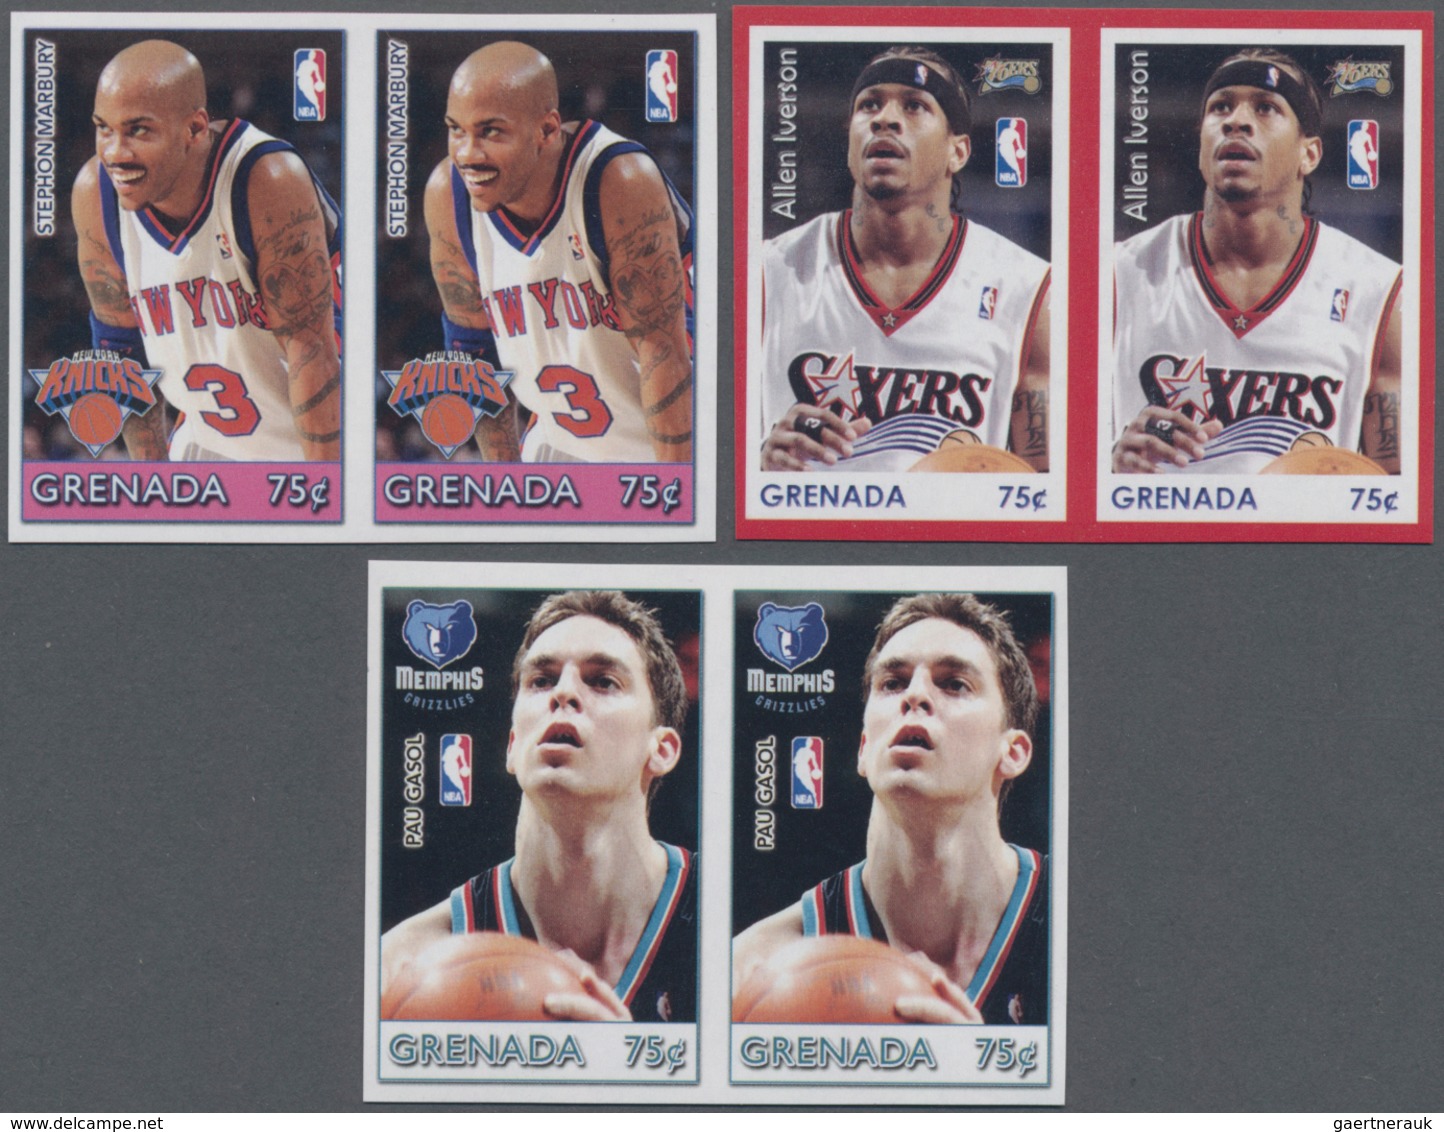 Thematik: Sport-Basketball / Sport-basketball: 2004, GRENADA: Basketball Players Of North American L - Basketball